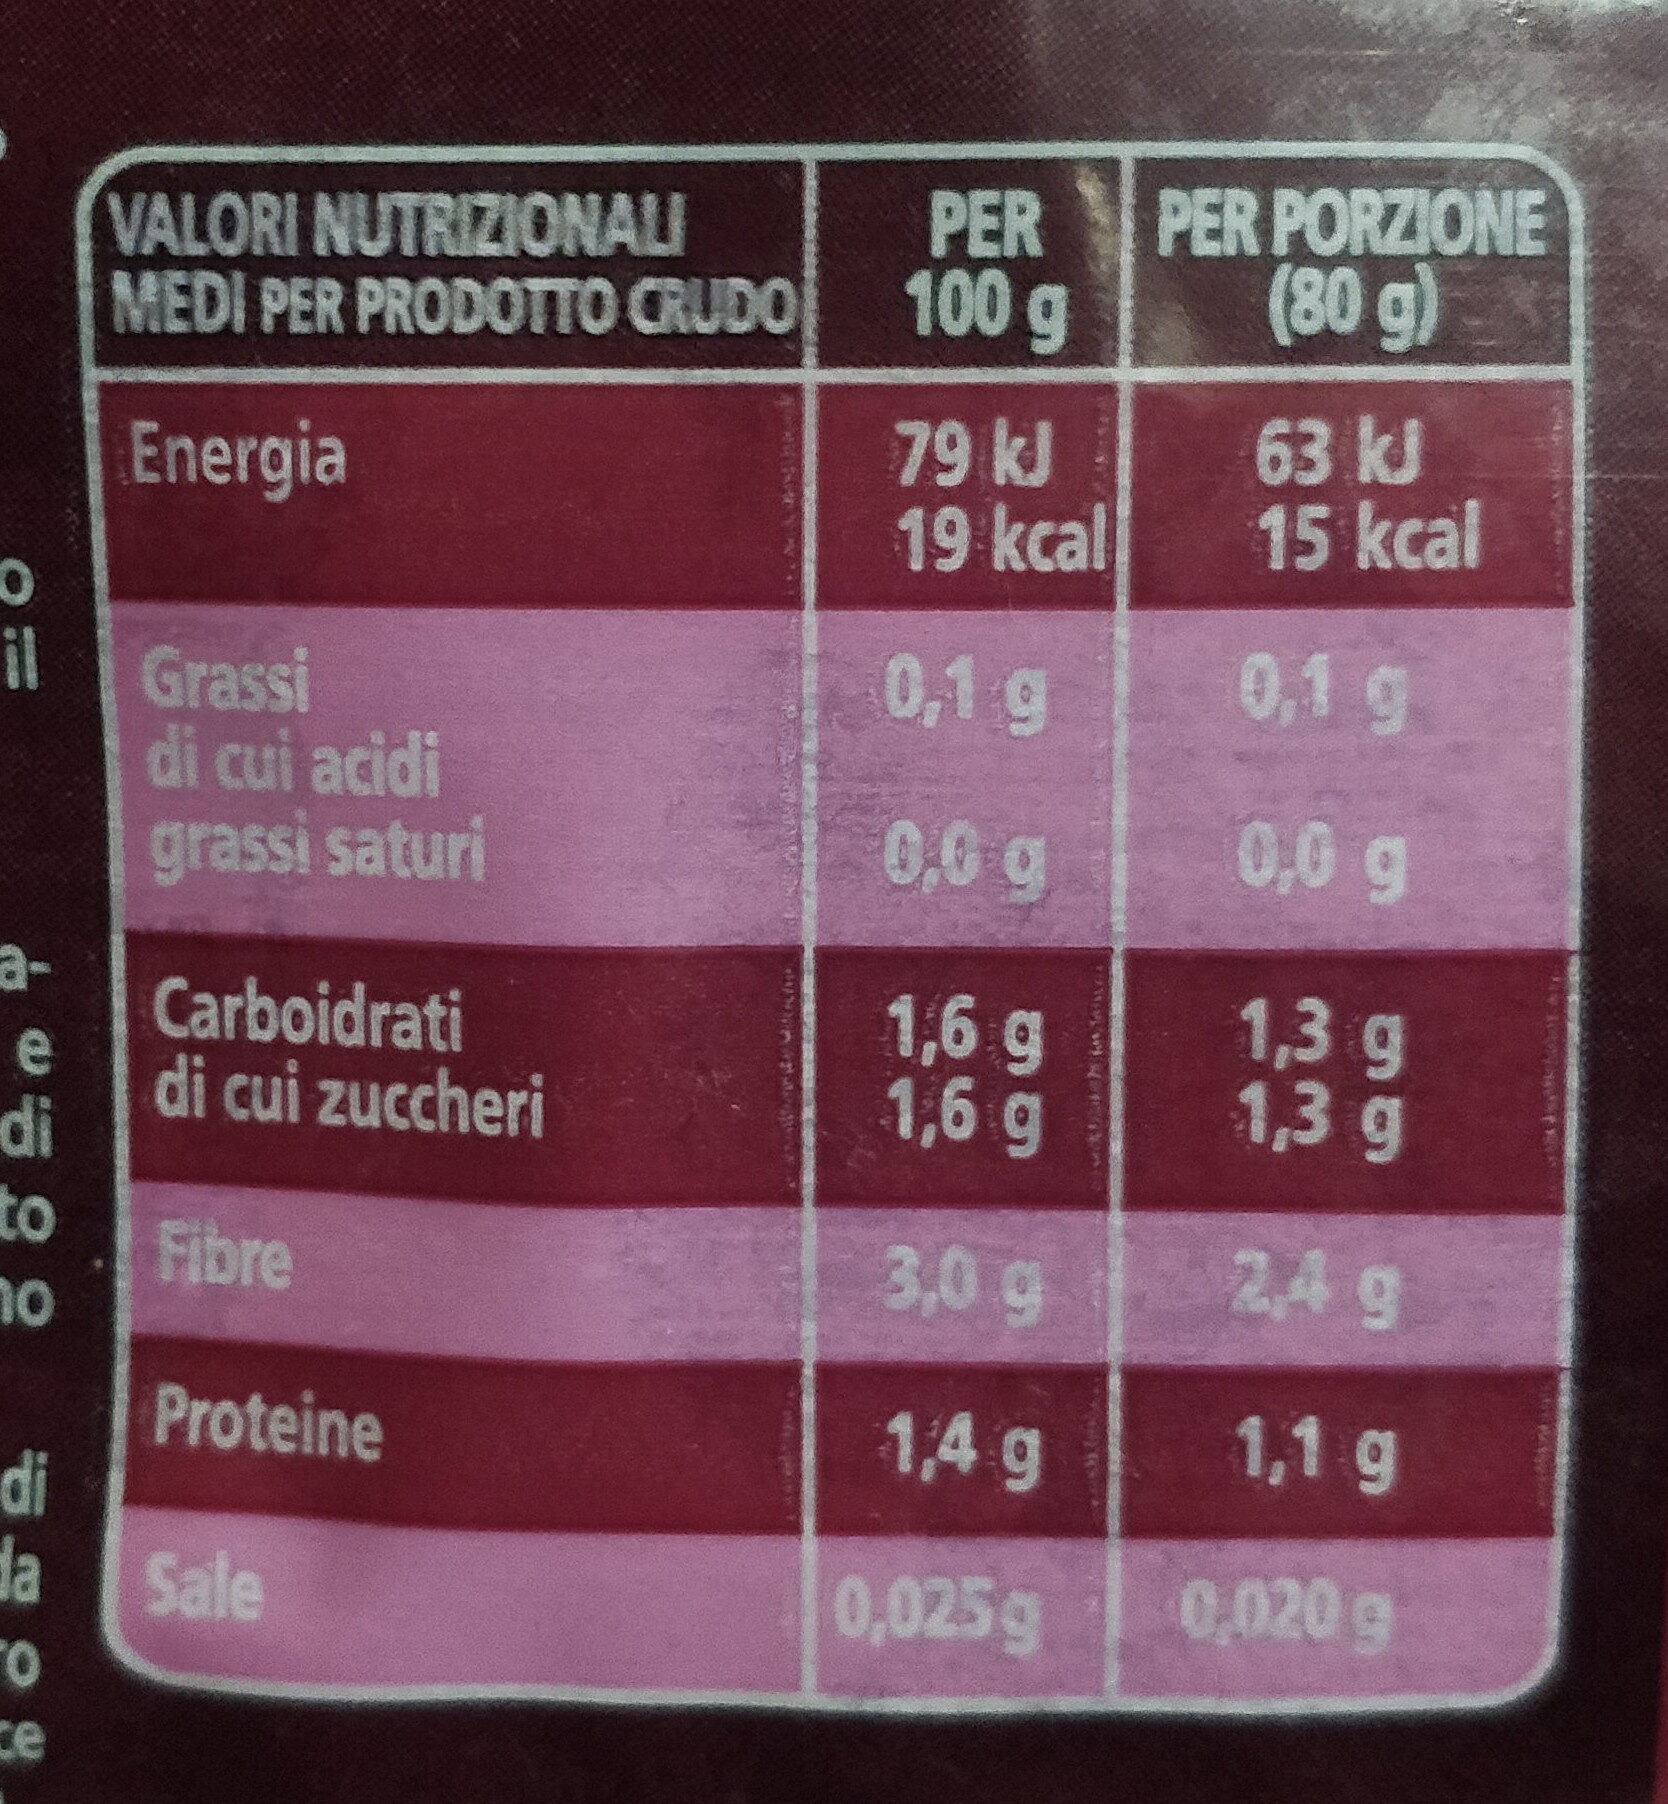 Radicchio variegato di castelfranco igp - Valori nutrizionali